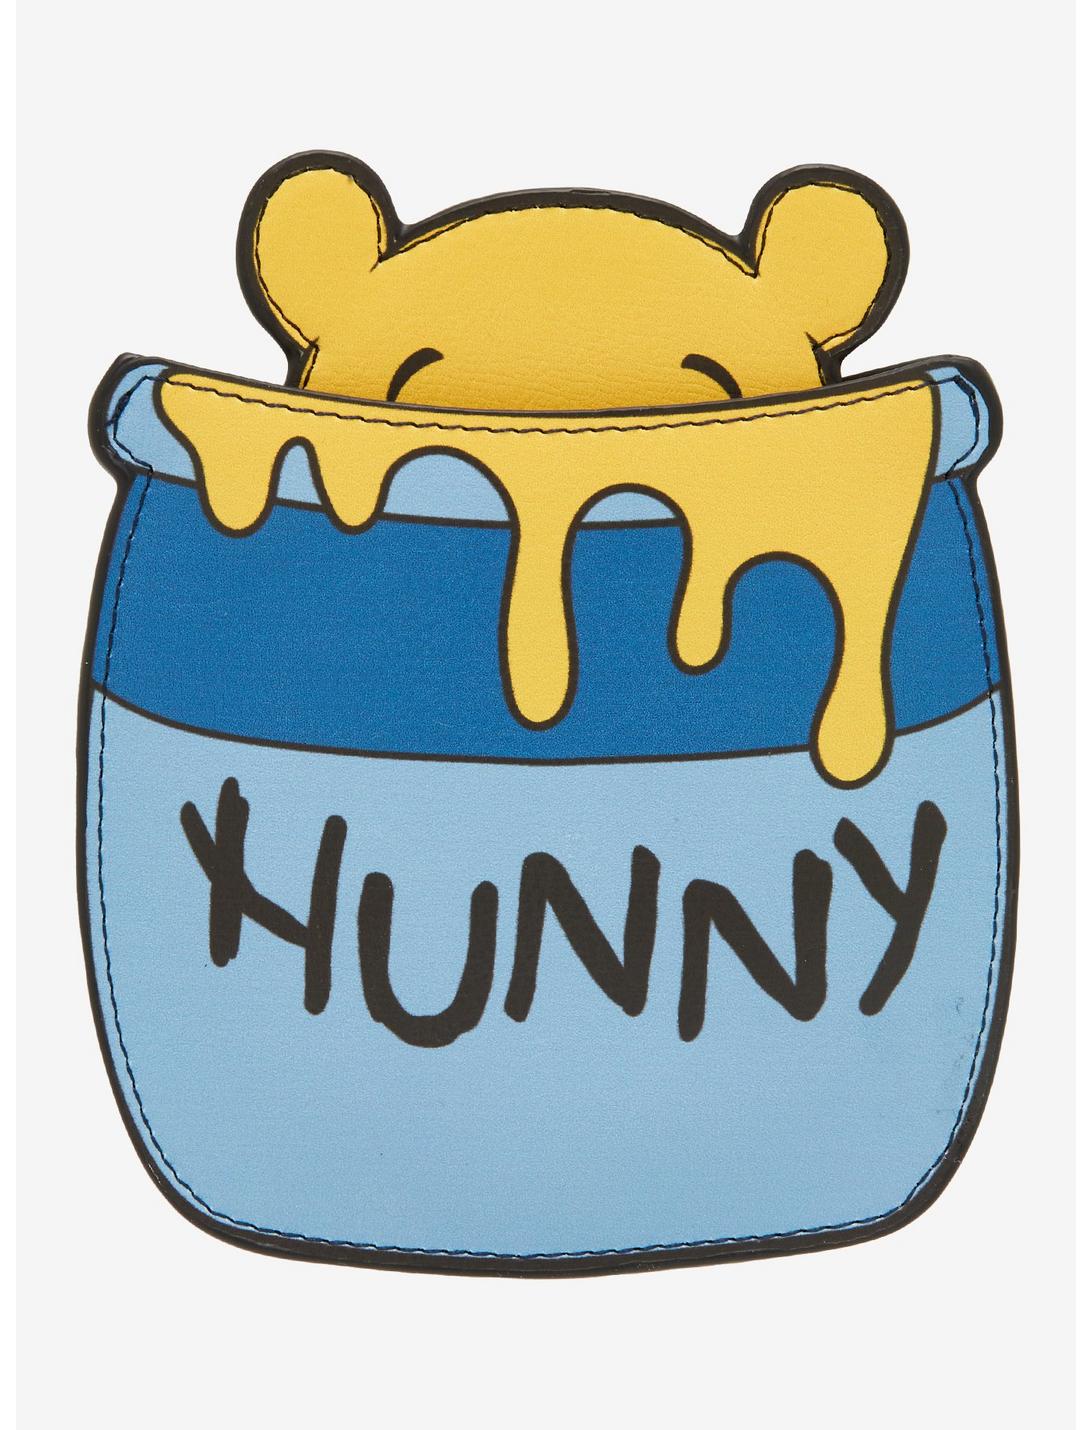 Disney Winnie The Pooh Peek-A-Boo Hunny Cardholder, , hi-res